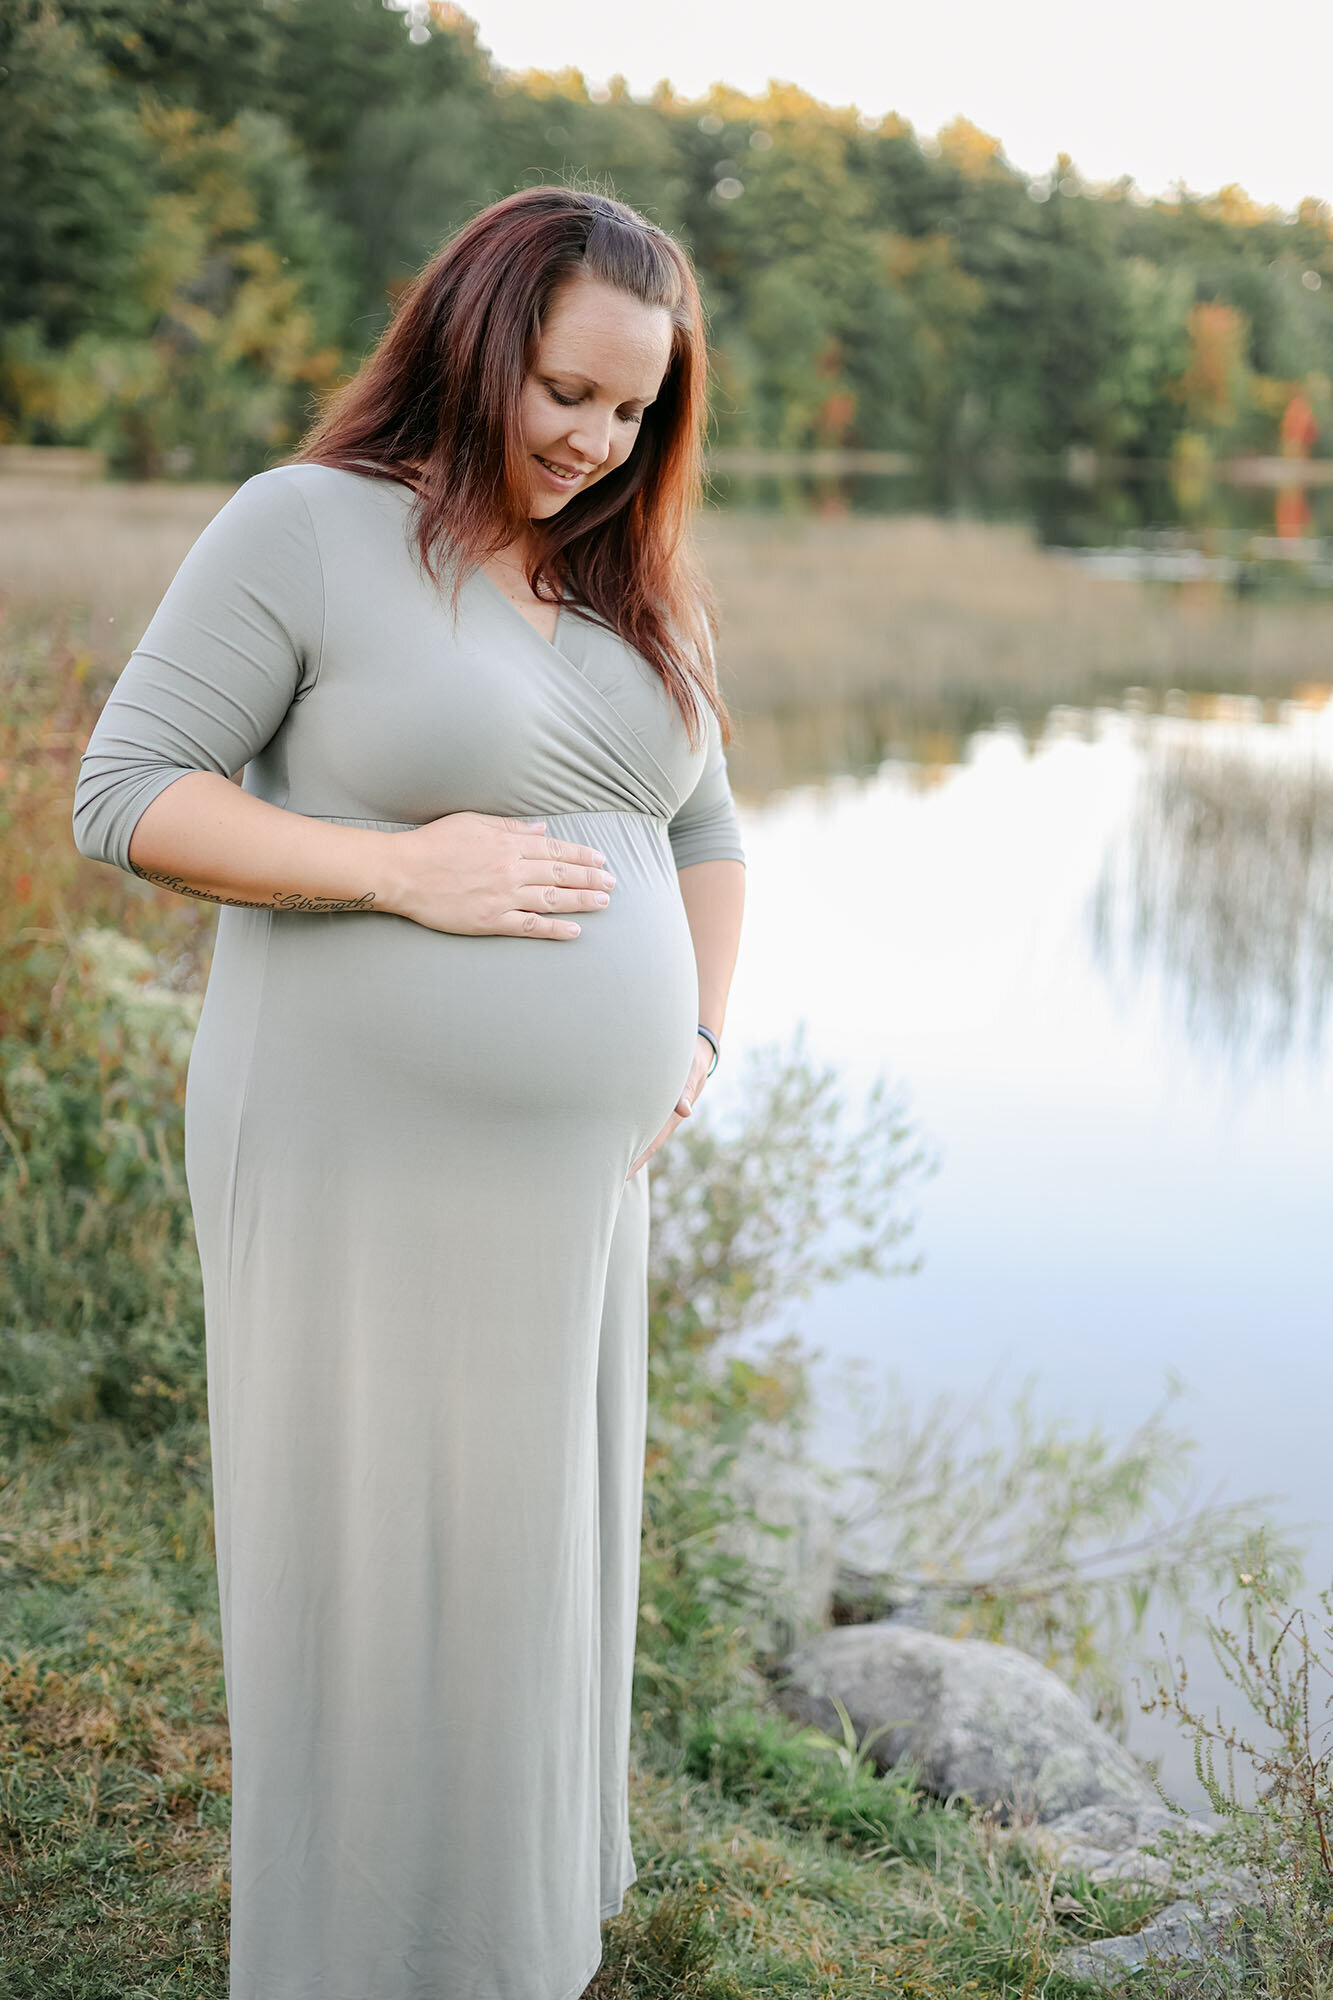 NH-Maternity-Photographer-013 copy